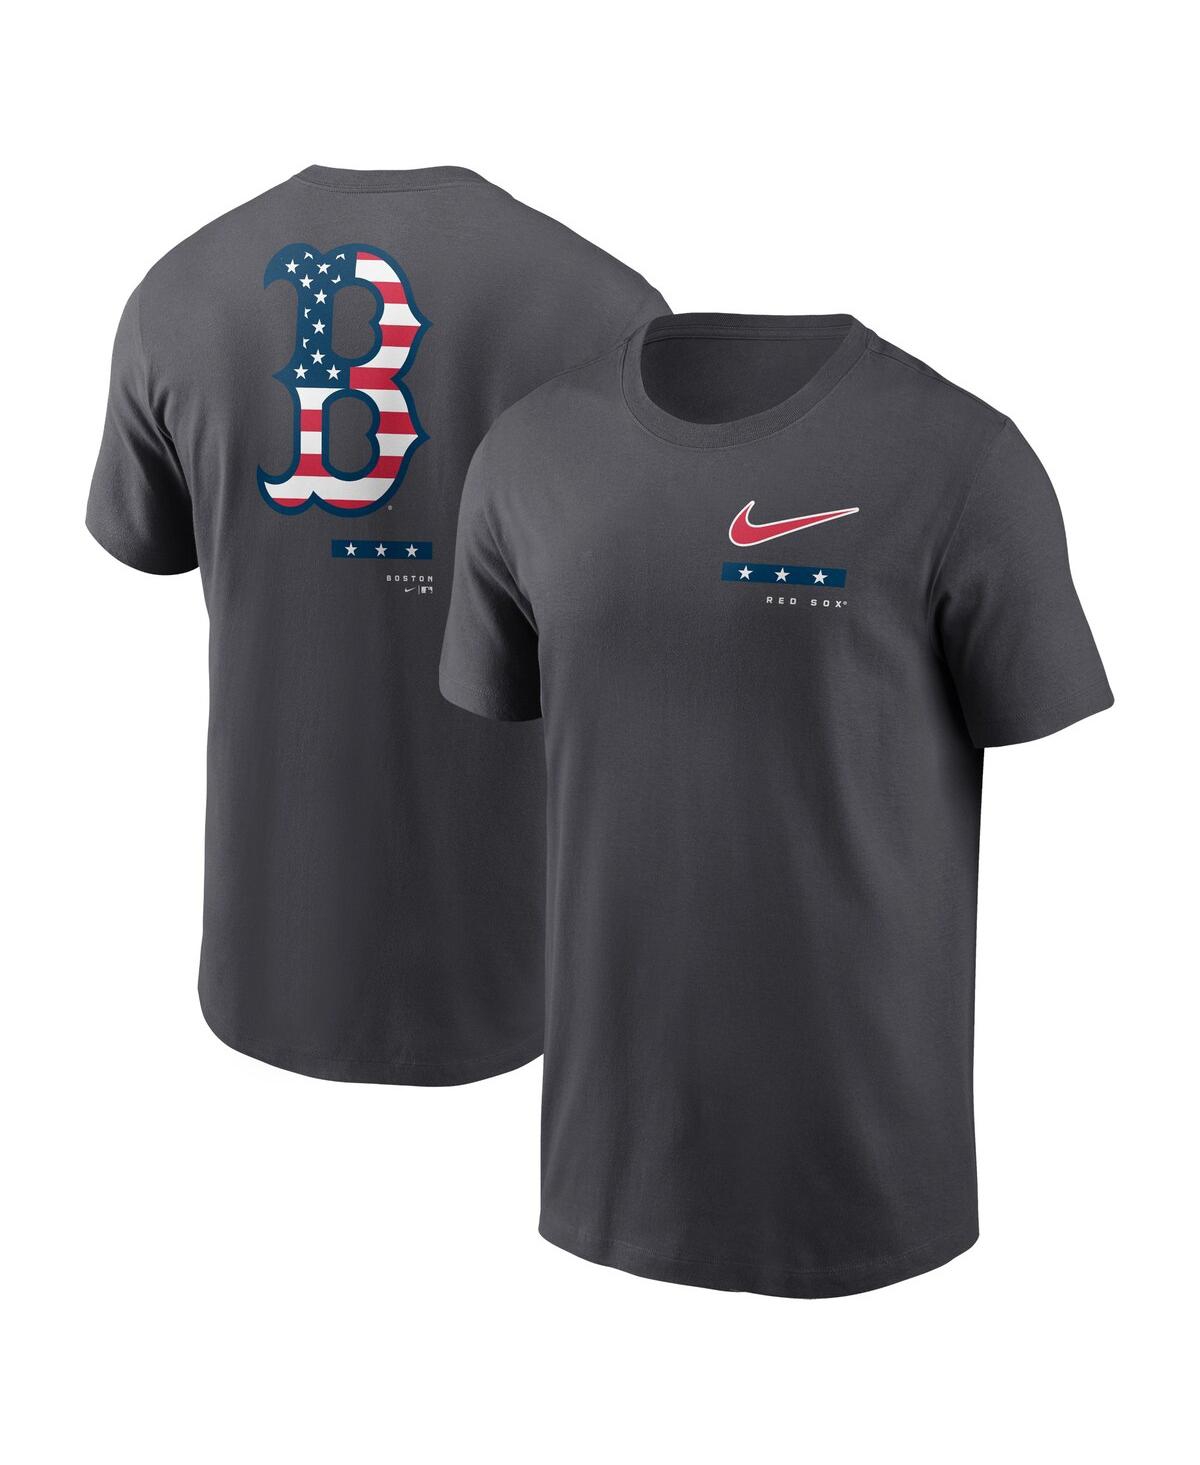 Men's Nike Anthracite Arizona Diamondbacks Americana T-Shirt Size: Small